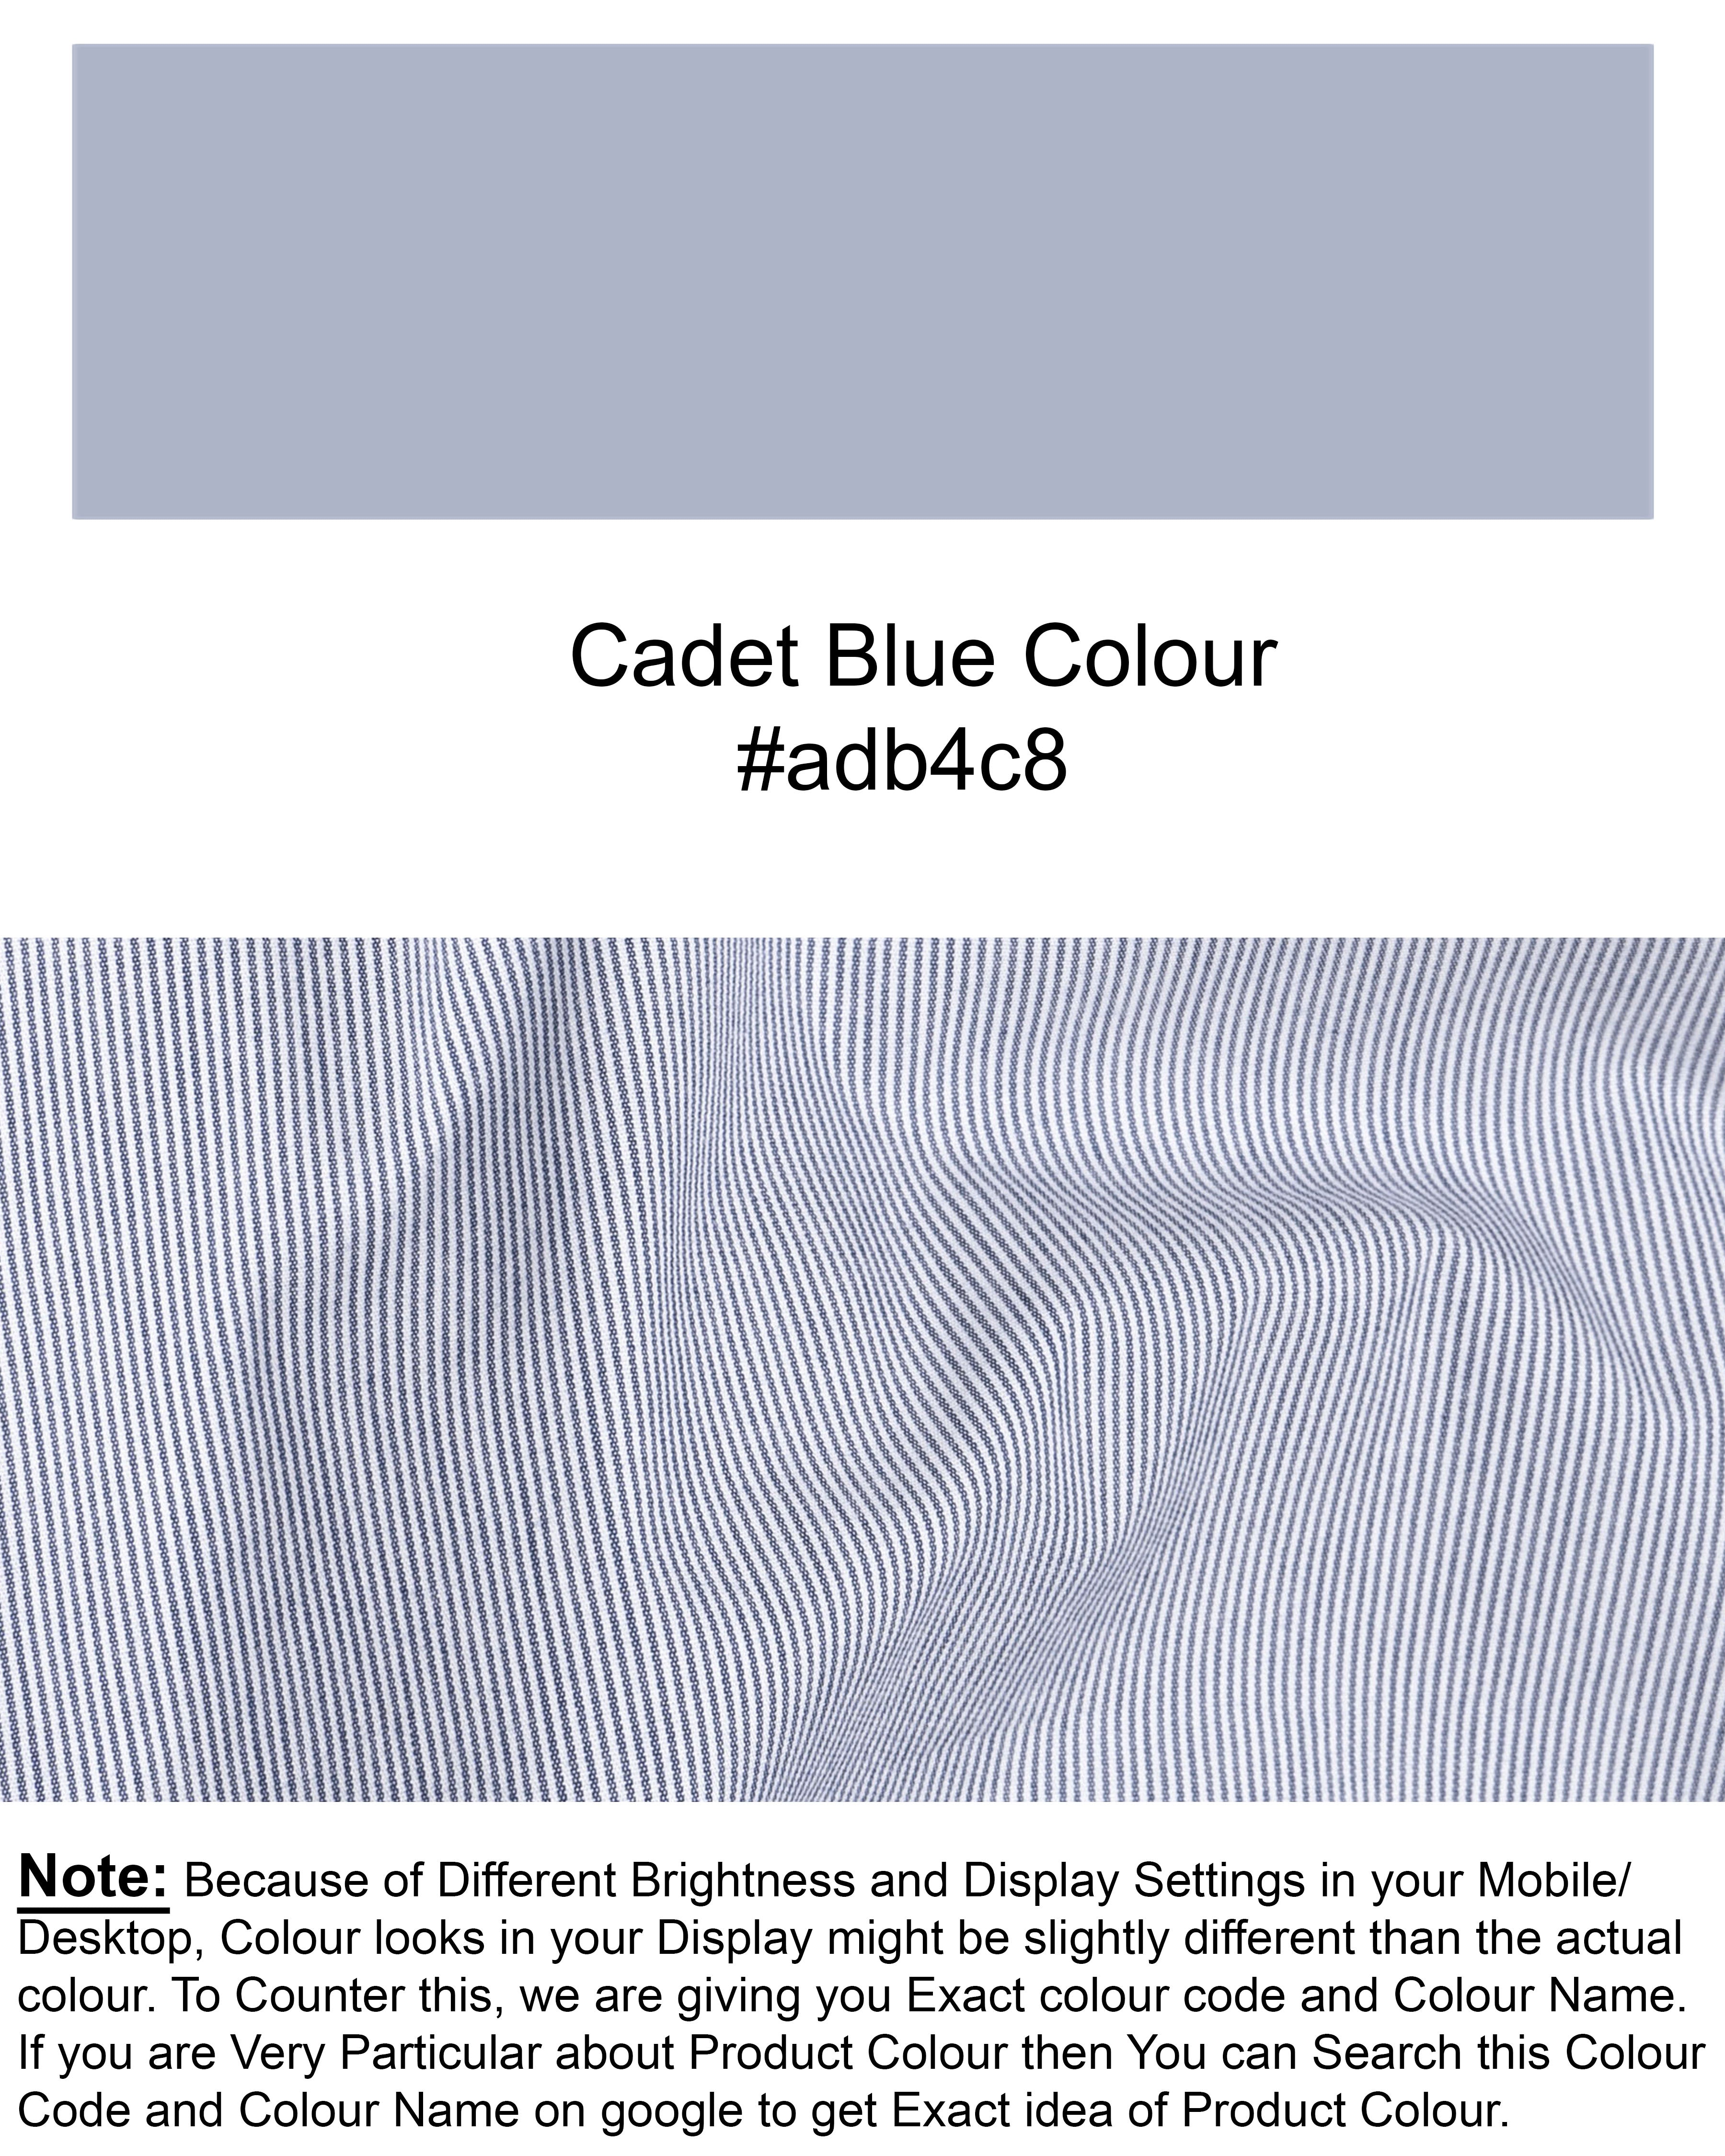 Cadet Blue Pin Striped Premium Cotton Shirt 5638-38, 5638-H-38, 5638-39, 5638-H-39, 5638-40, 5638-H-40, 5638-42, 5638-H-42, 5638-44, 5638-H-44, 5638-46, 5638-H-46, 5638-48, 5638-H-48, 5638-50, 5638-H-50, 5638-52, 5638-H-52